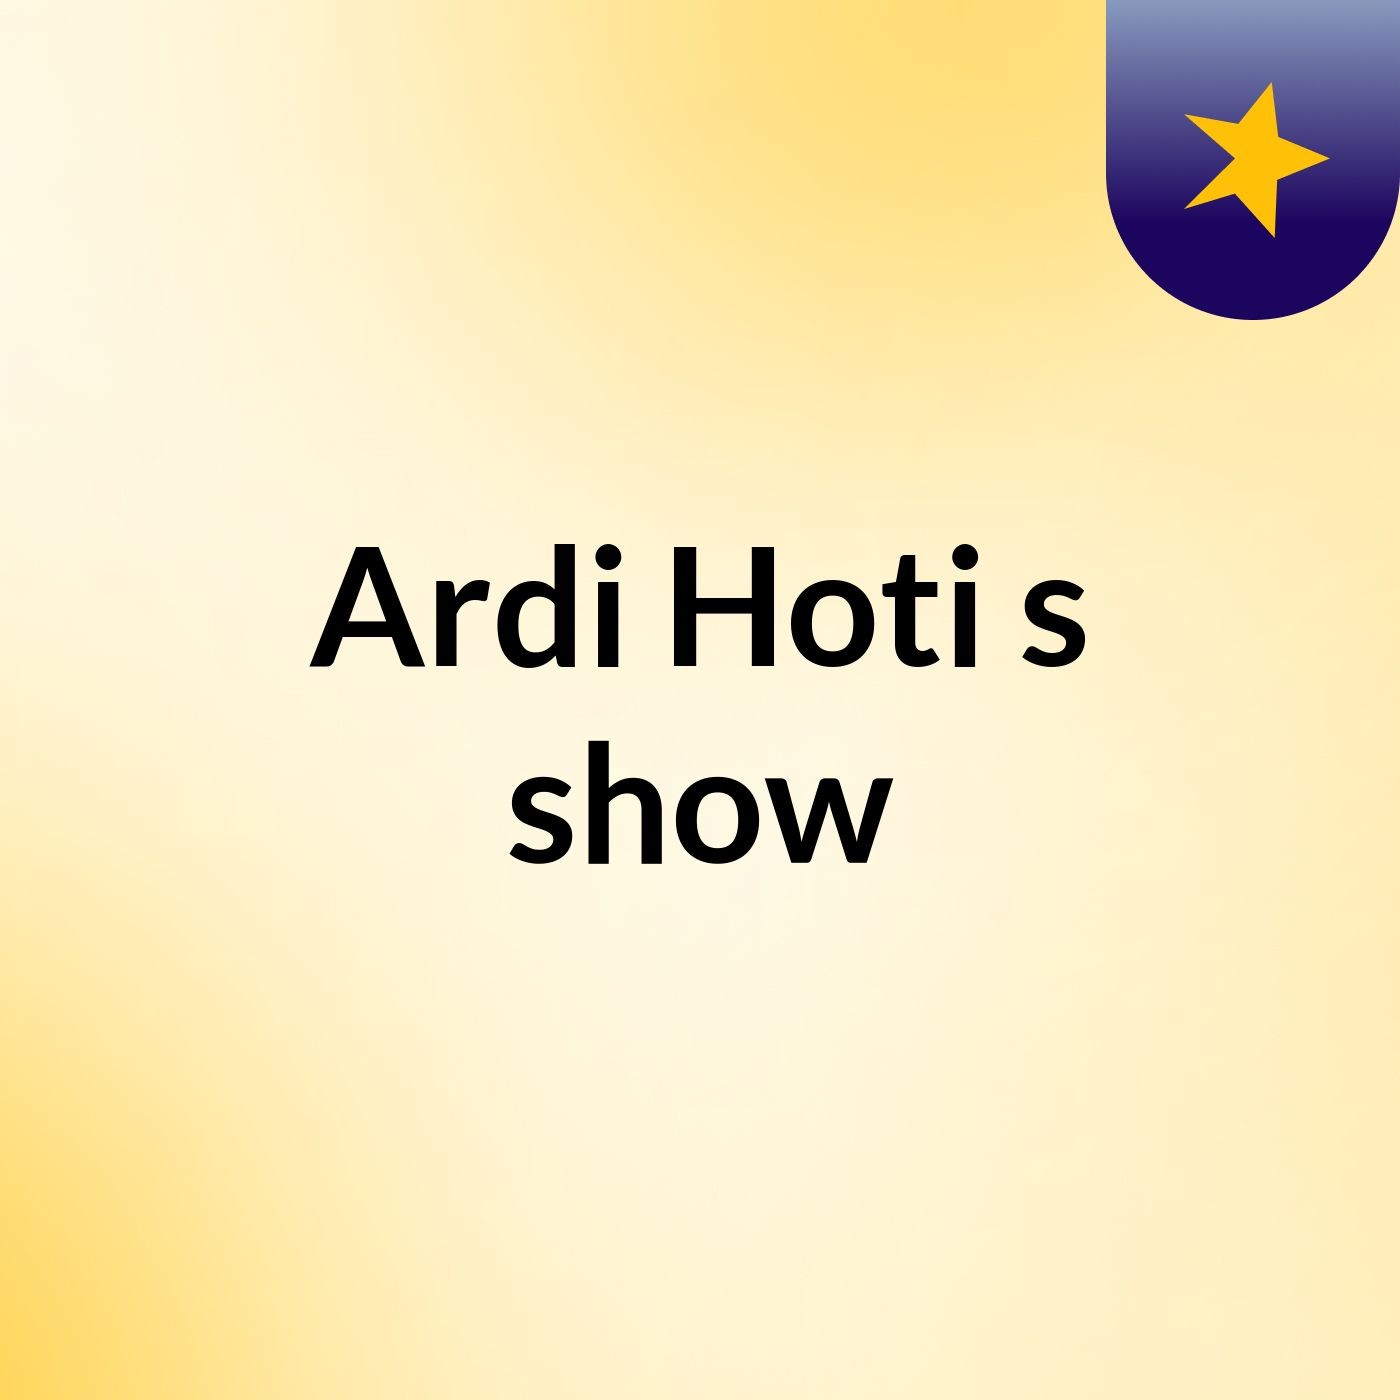 Ardi Hoti's show